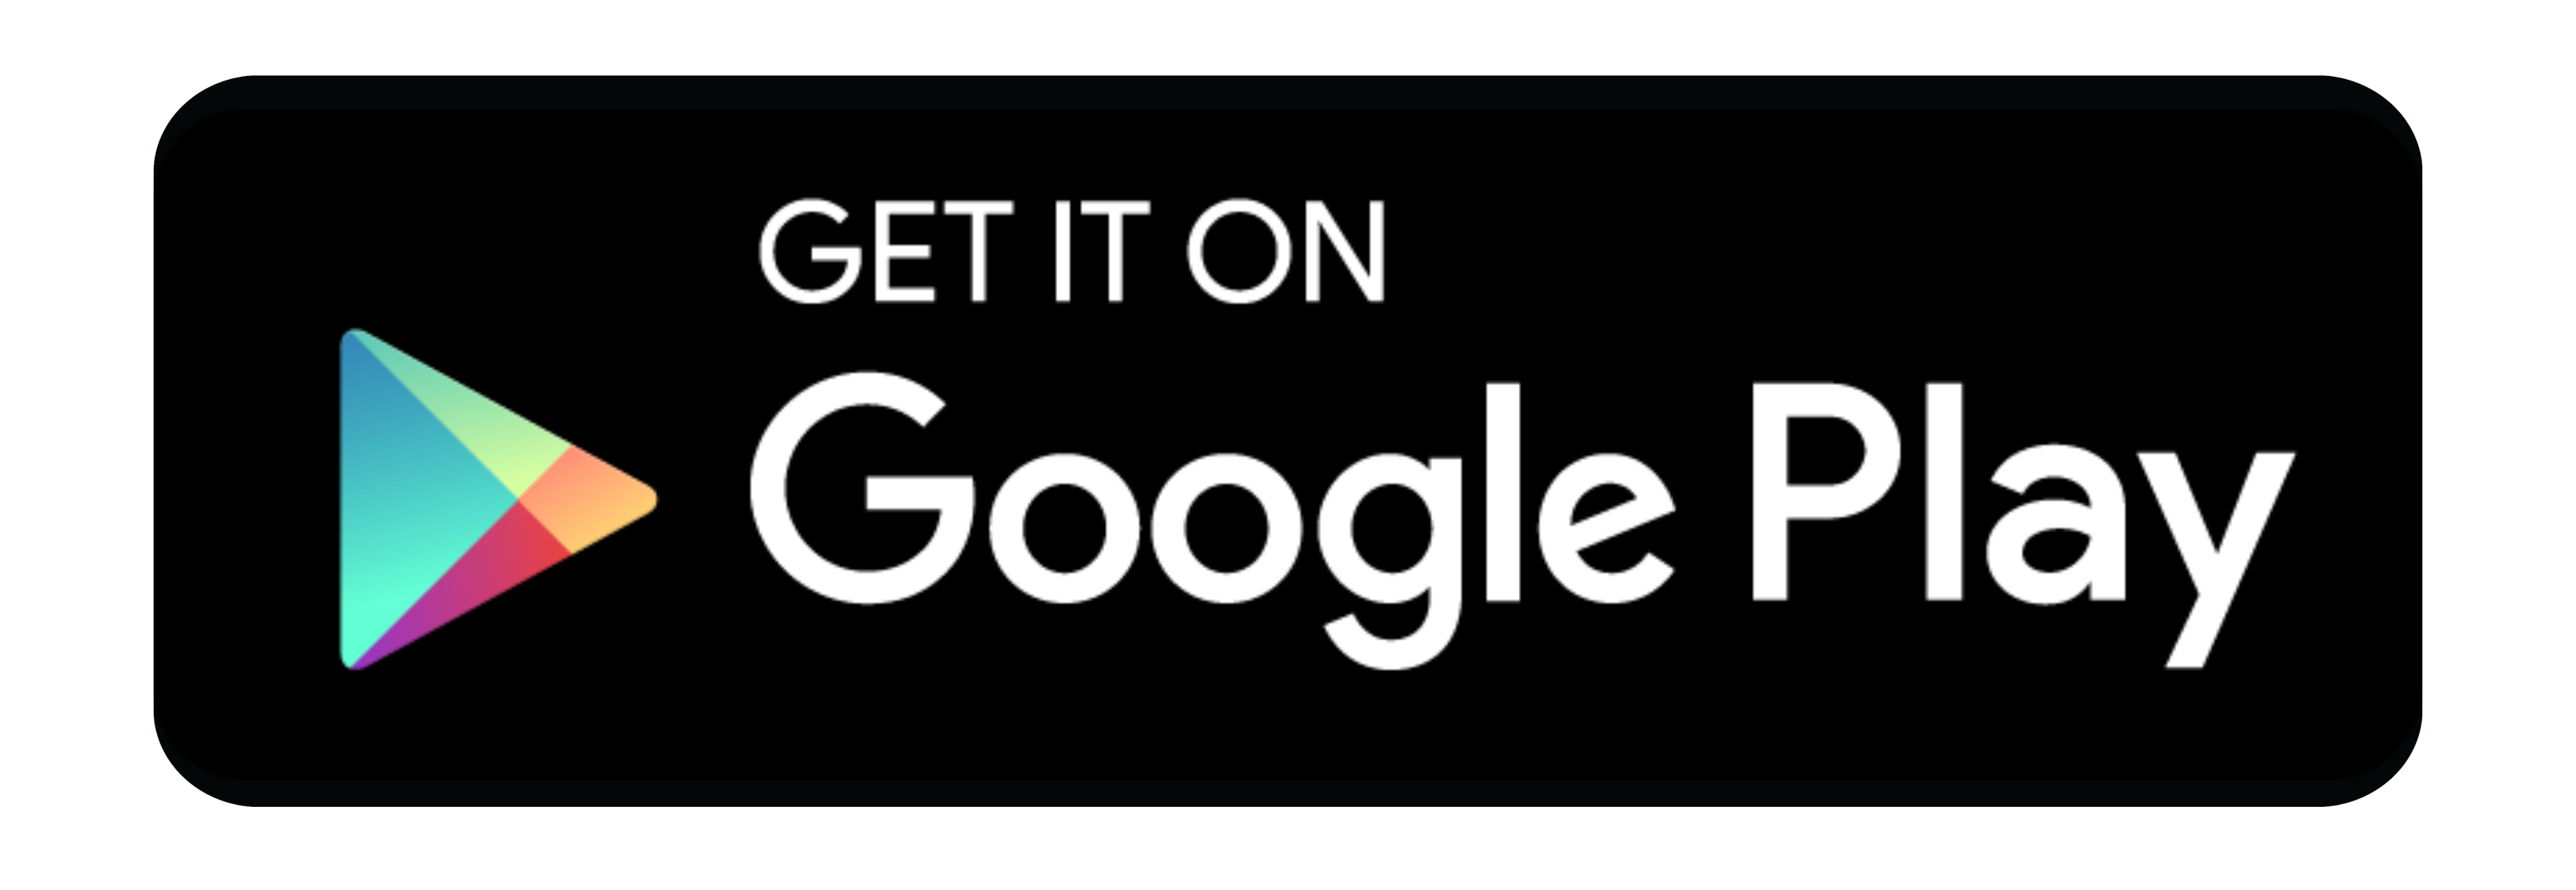 Google Play Logo PNG Image